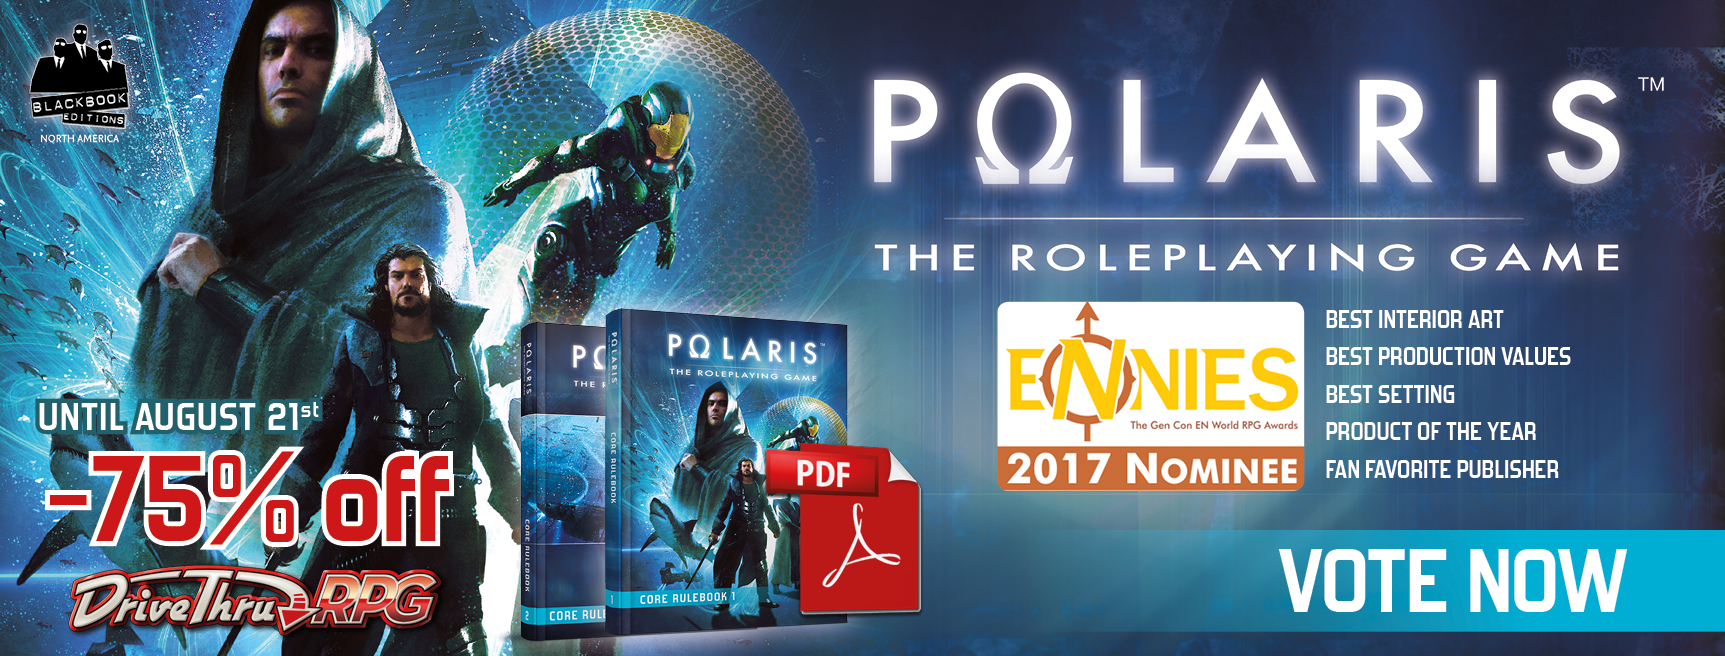 Polaris nominated for the ENnies 2017!